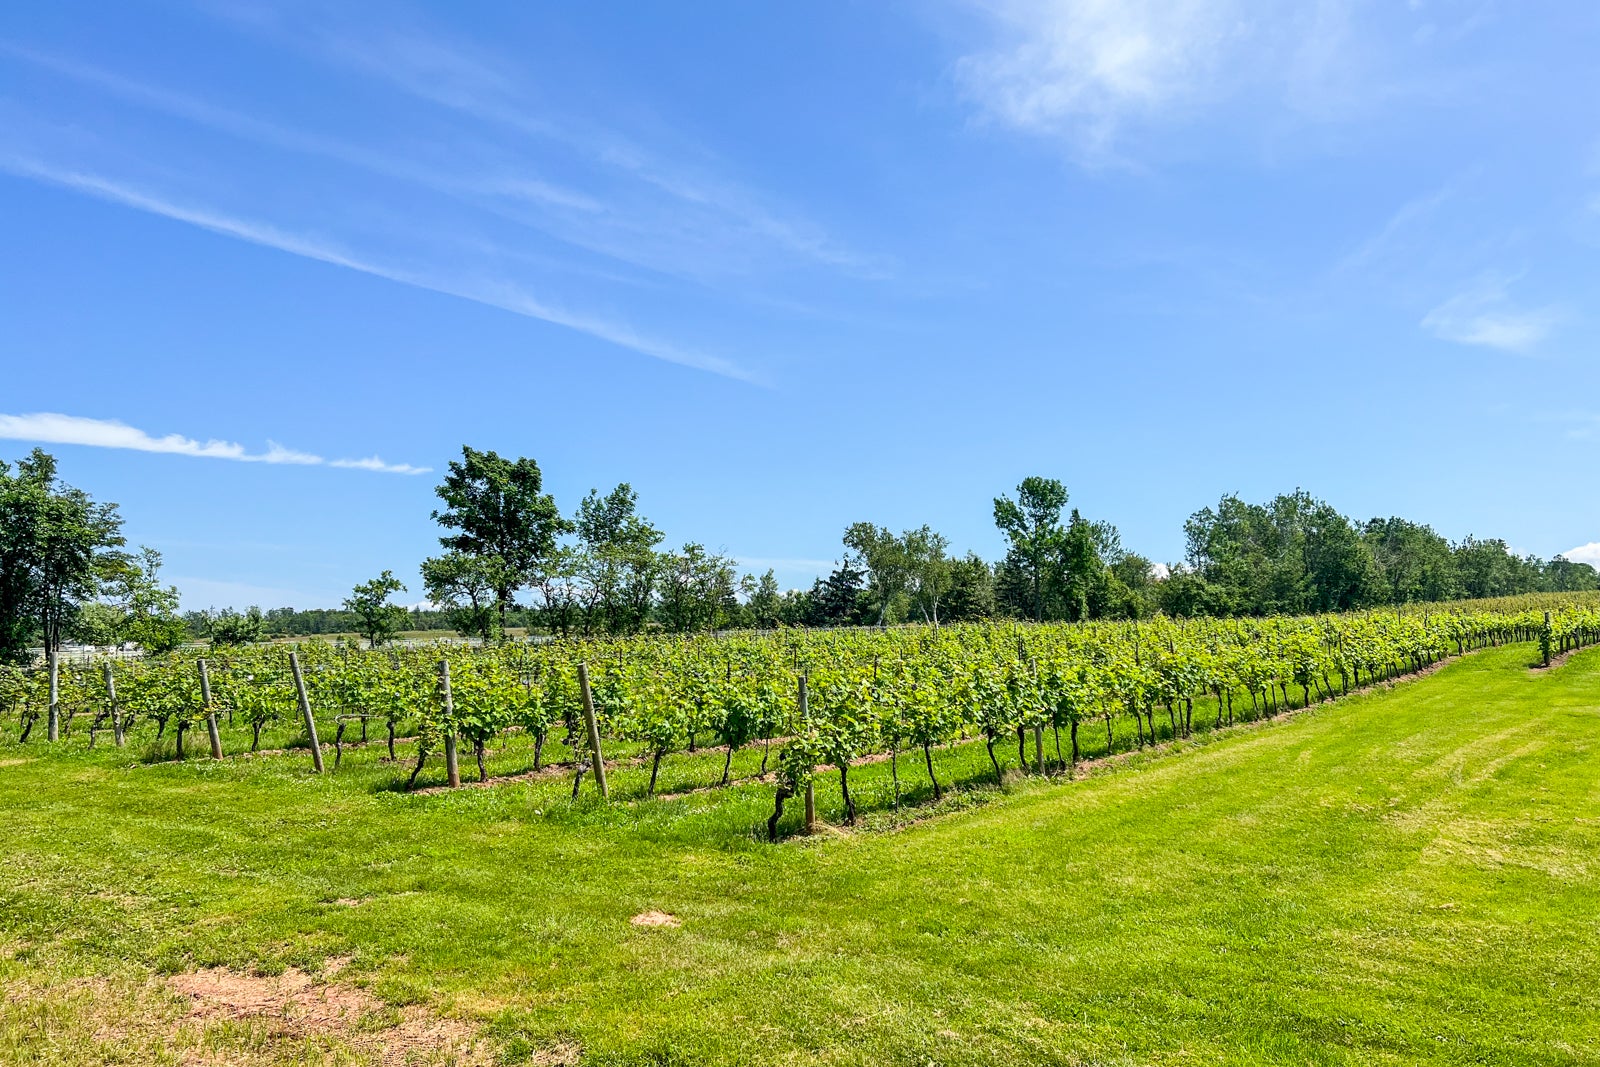 Nova Scotia winery Jost Vineyards